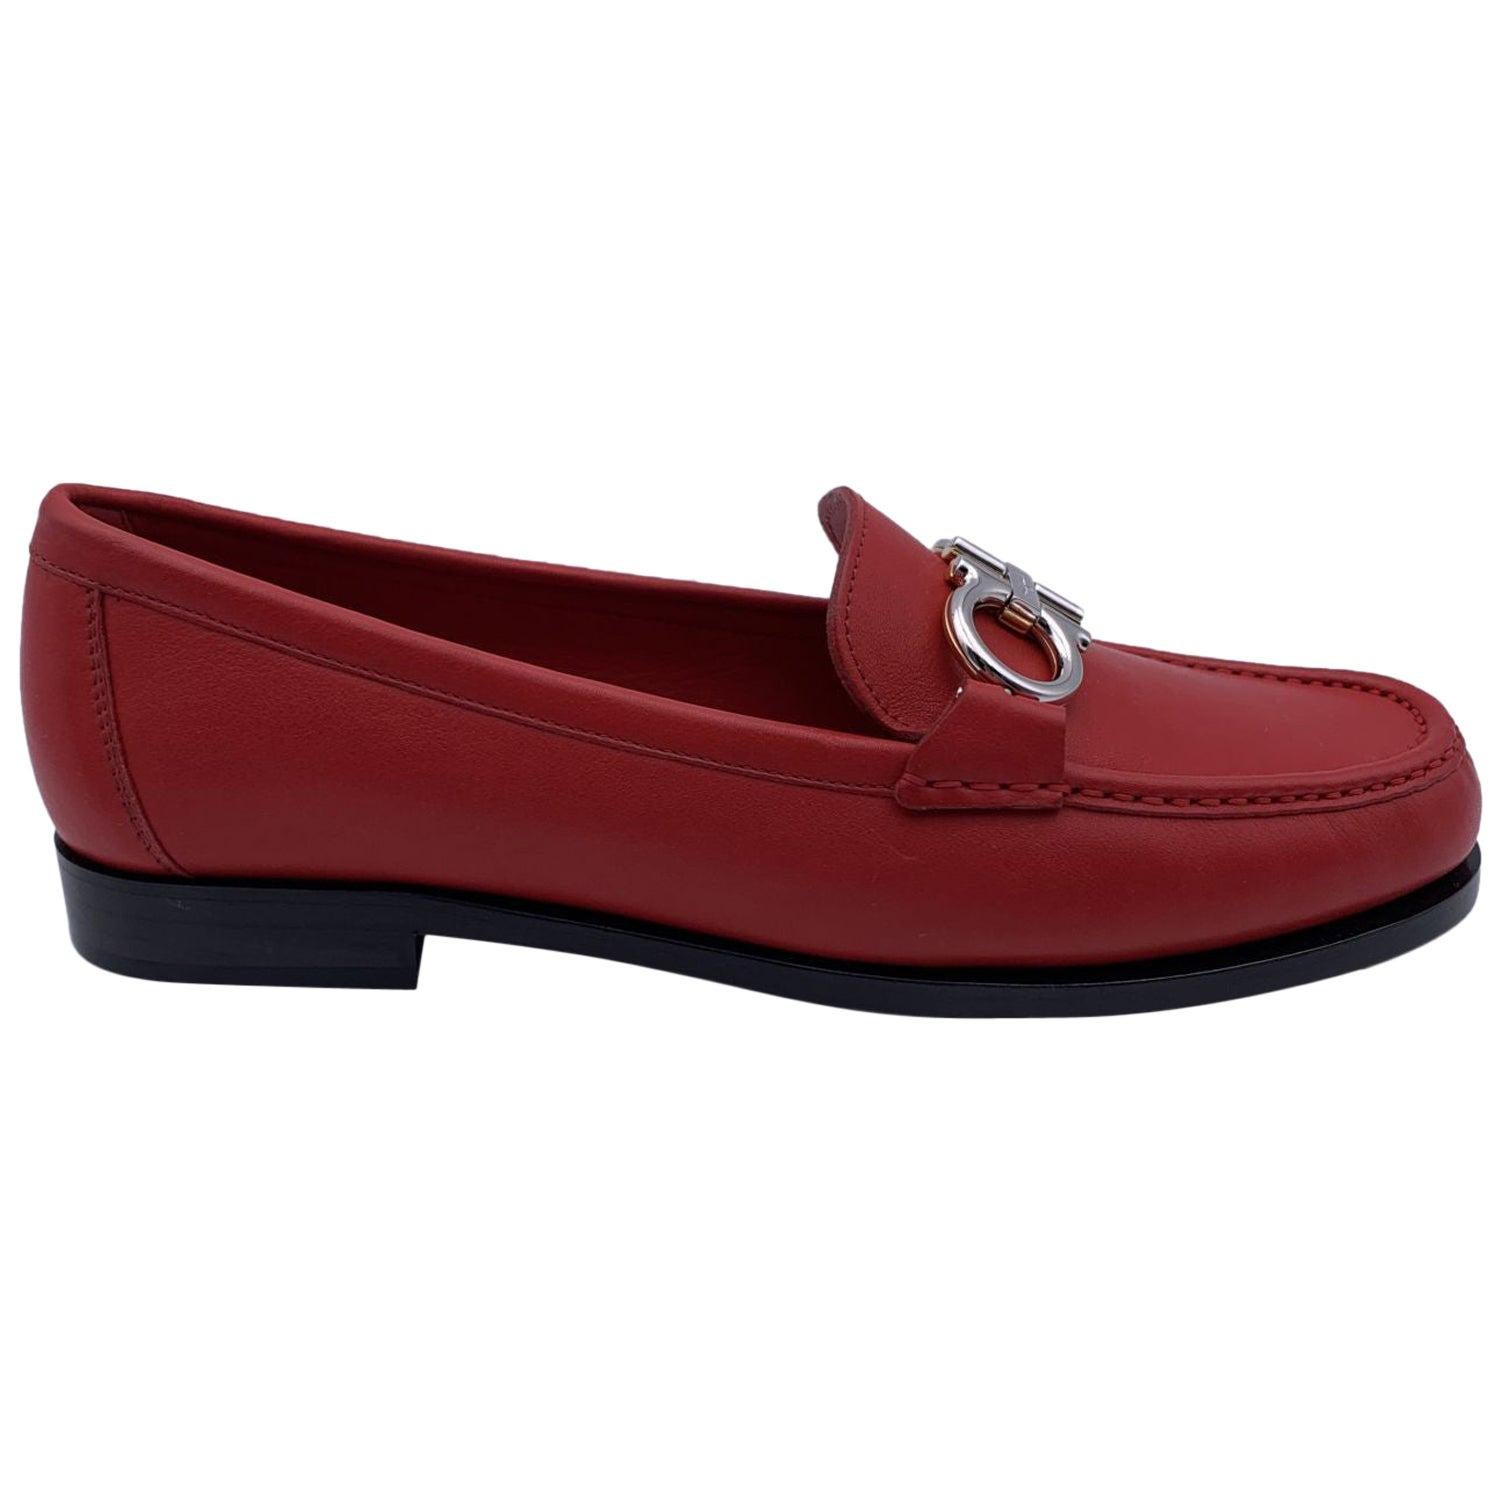 Salvatore Ferragamo Leather Rolo Loafers Moccassins Size 8C 38.5C